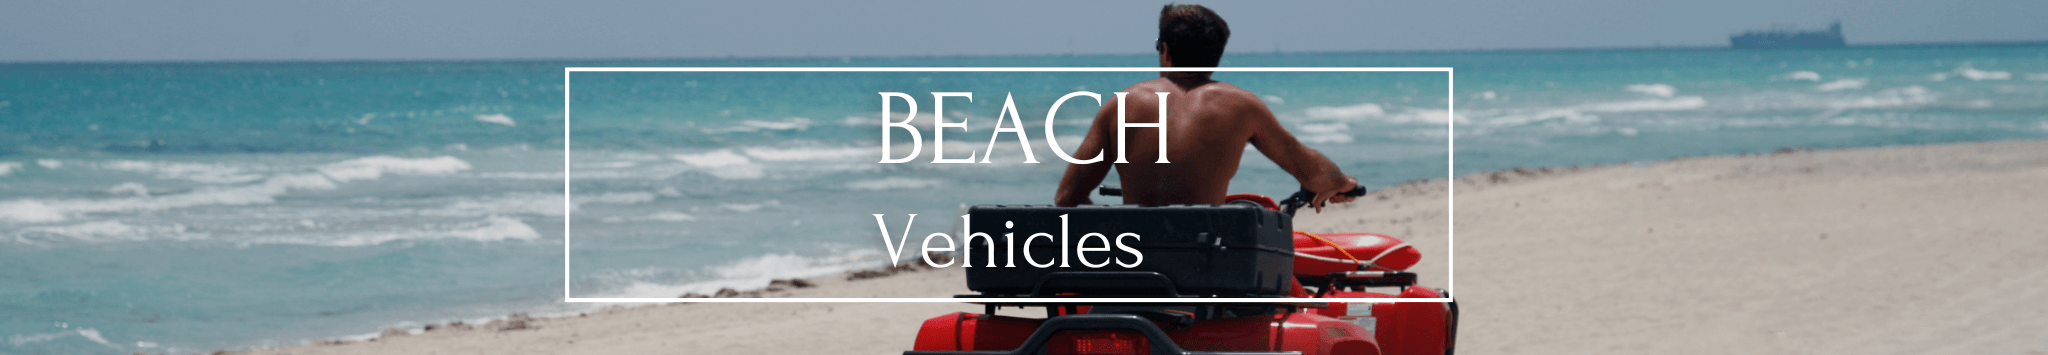 Beach Vehicles